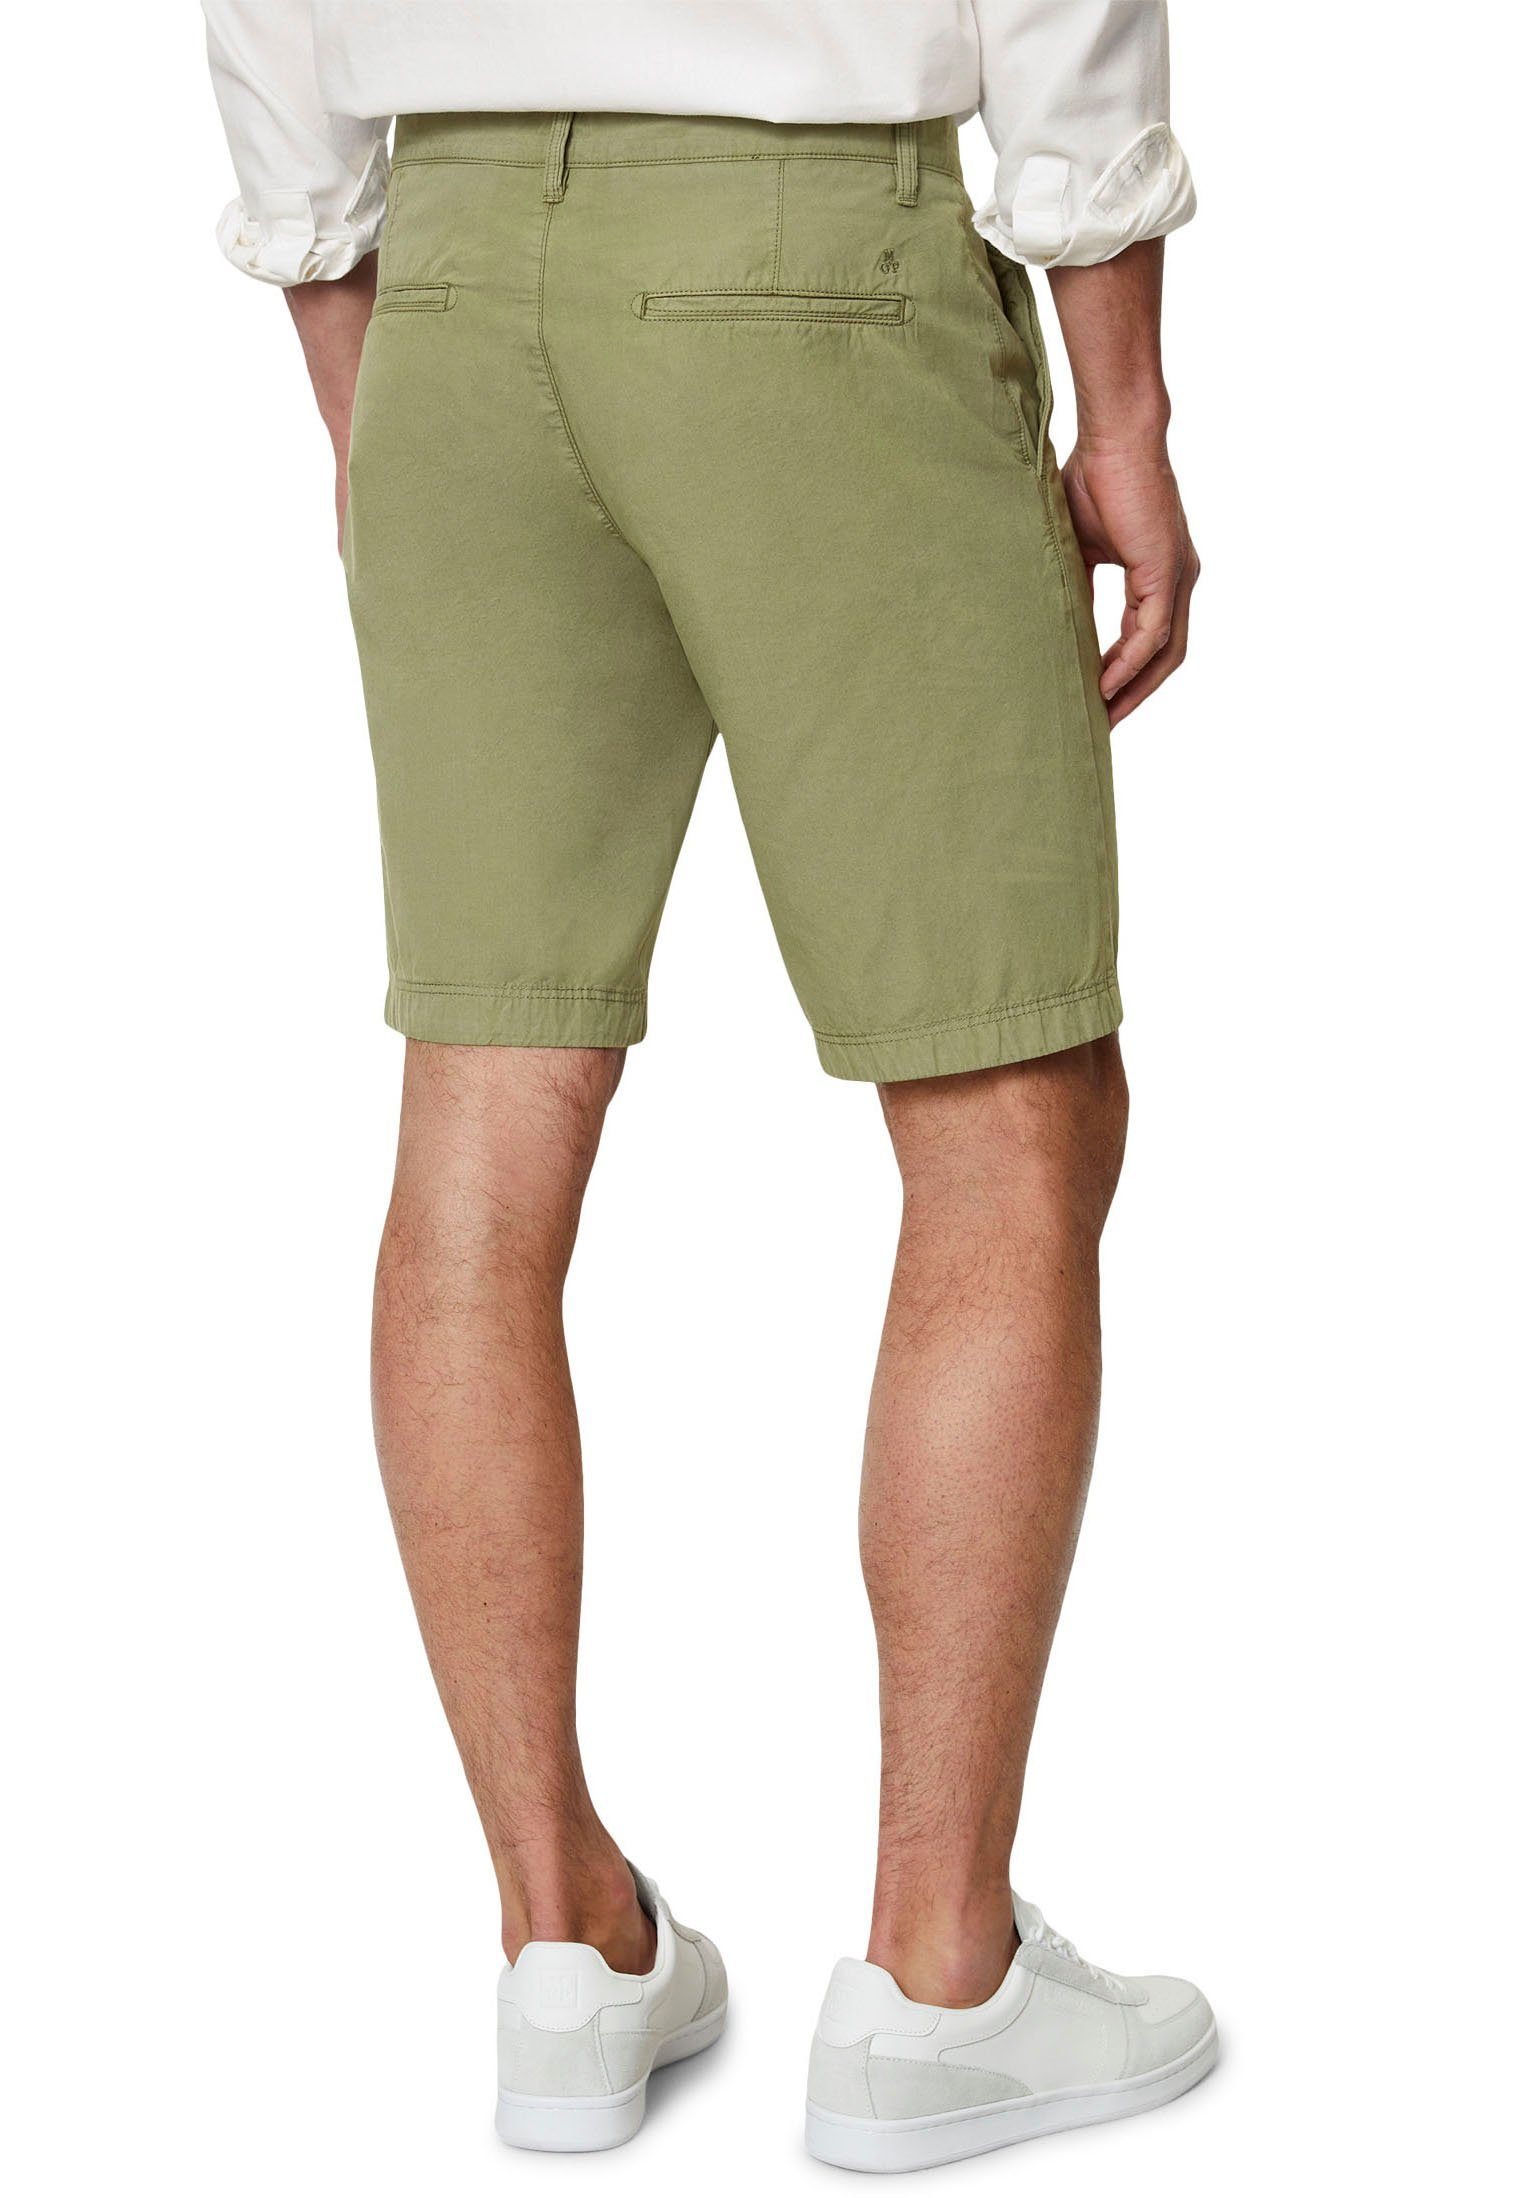 Marc O'Polo Shorts pkts, 52,6cm; auf -3cm LO der fit, Length regular welt Shorts, Logostickerei Rückseite Reso mit